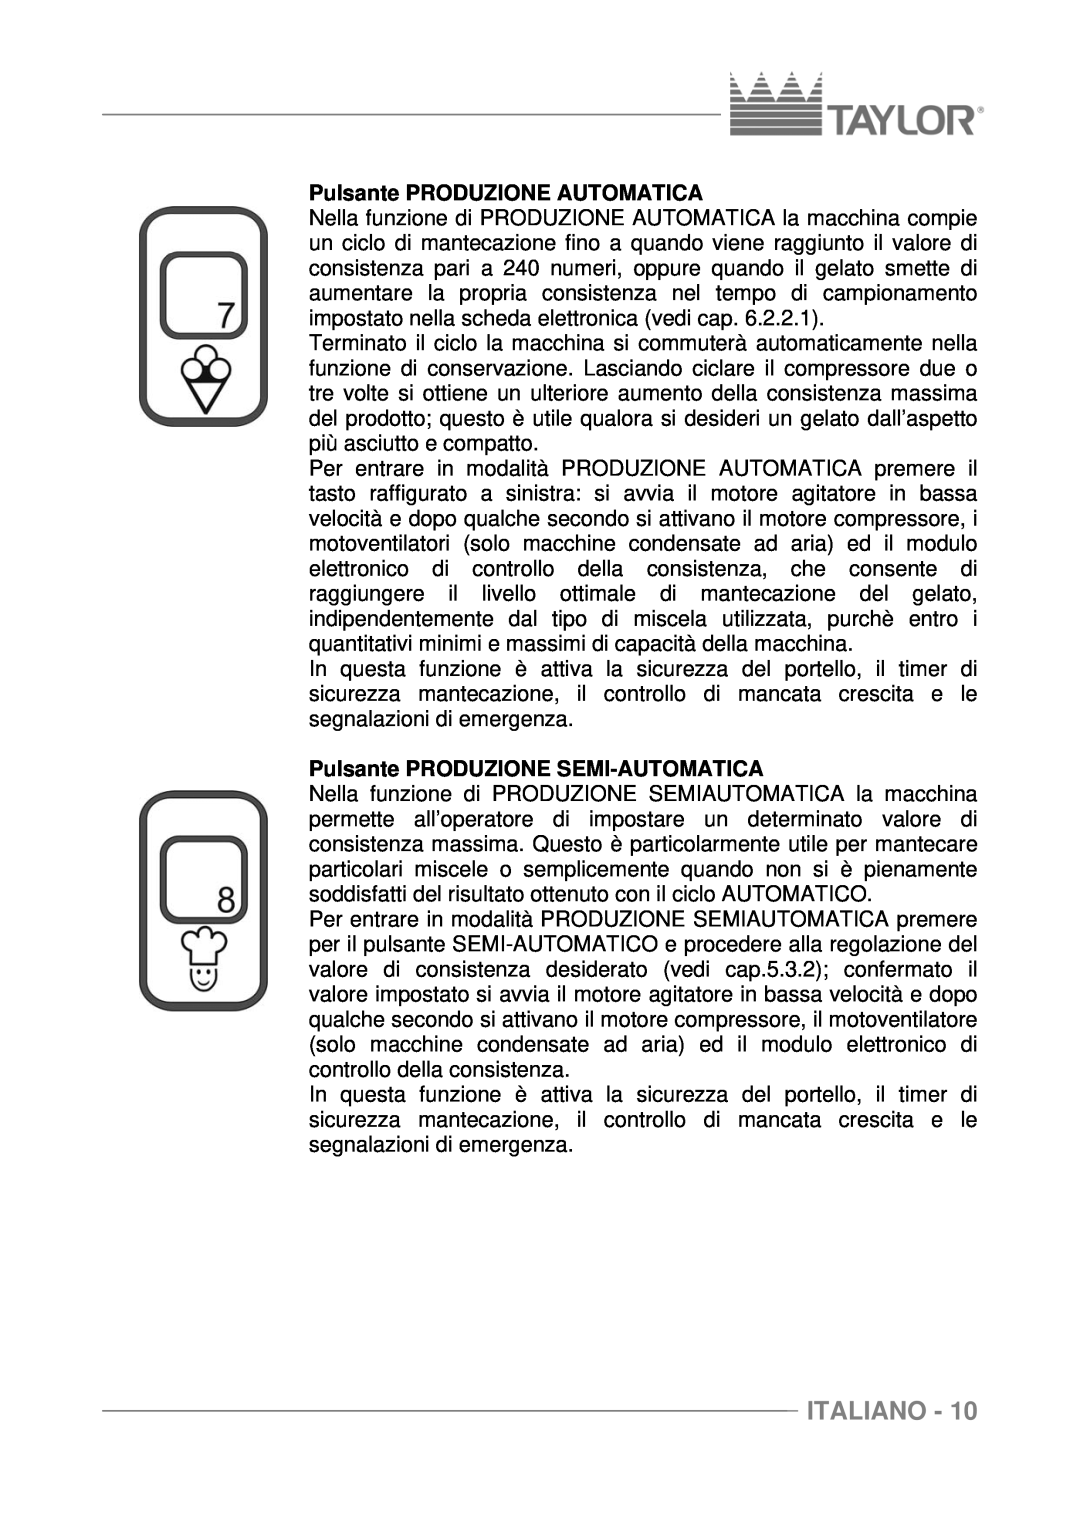 Taylor C116, C117, C118 manuel dutilisation Pulsante PRODUZIONE AUTOMATICA, Pulsante PRODUZIONE SEMI-AUTOMATICA, Italiano 